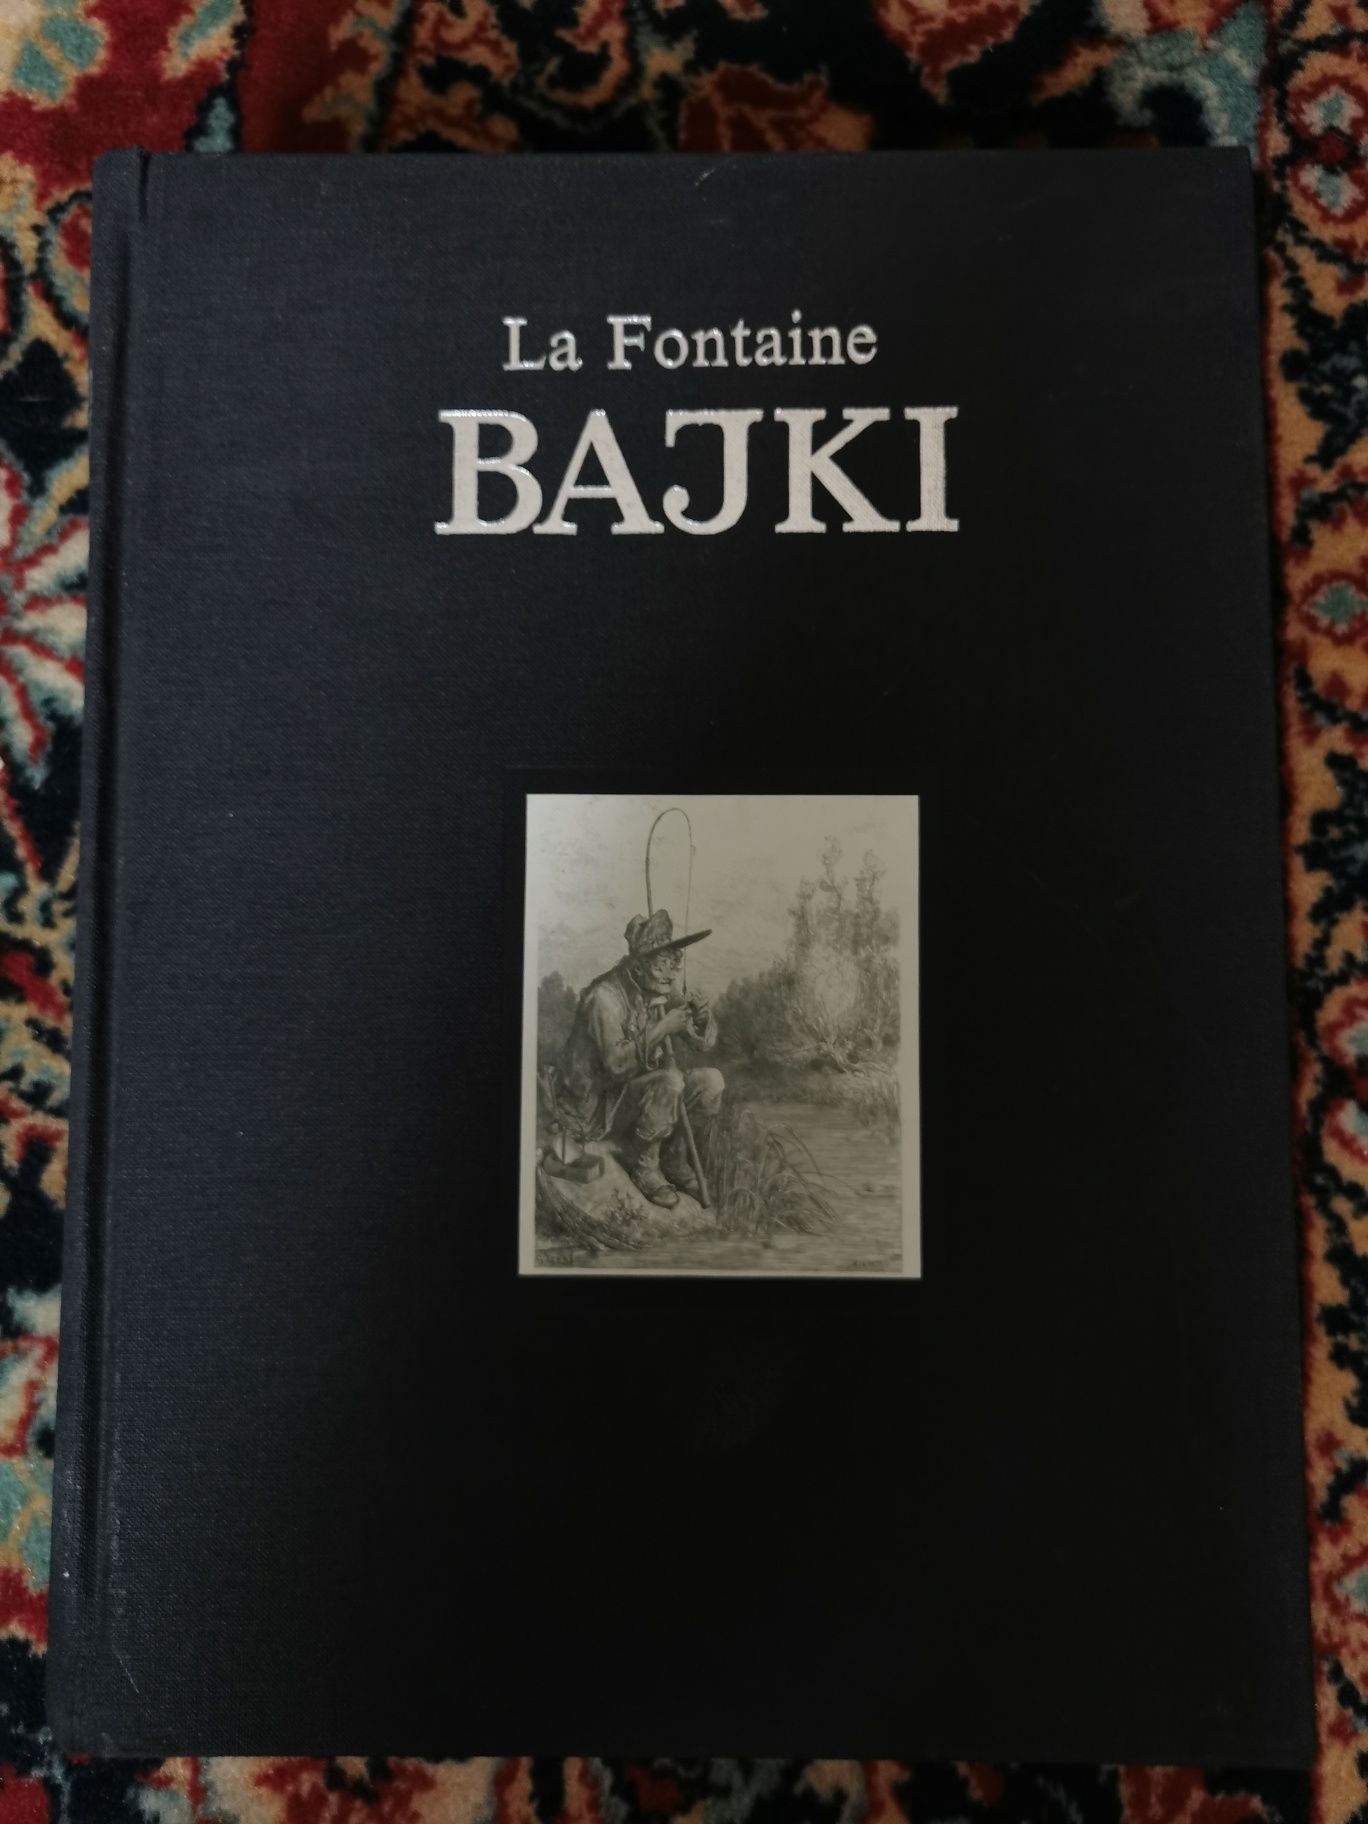 La Fontaine Bajki z rycinami Gustave'a Doré